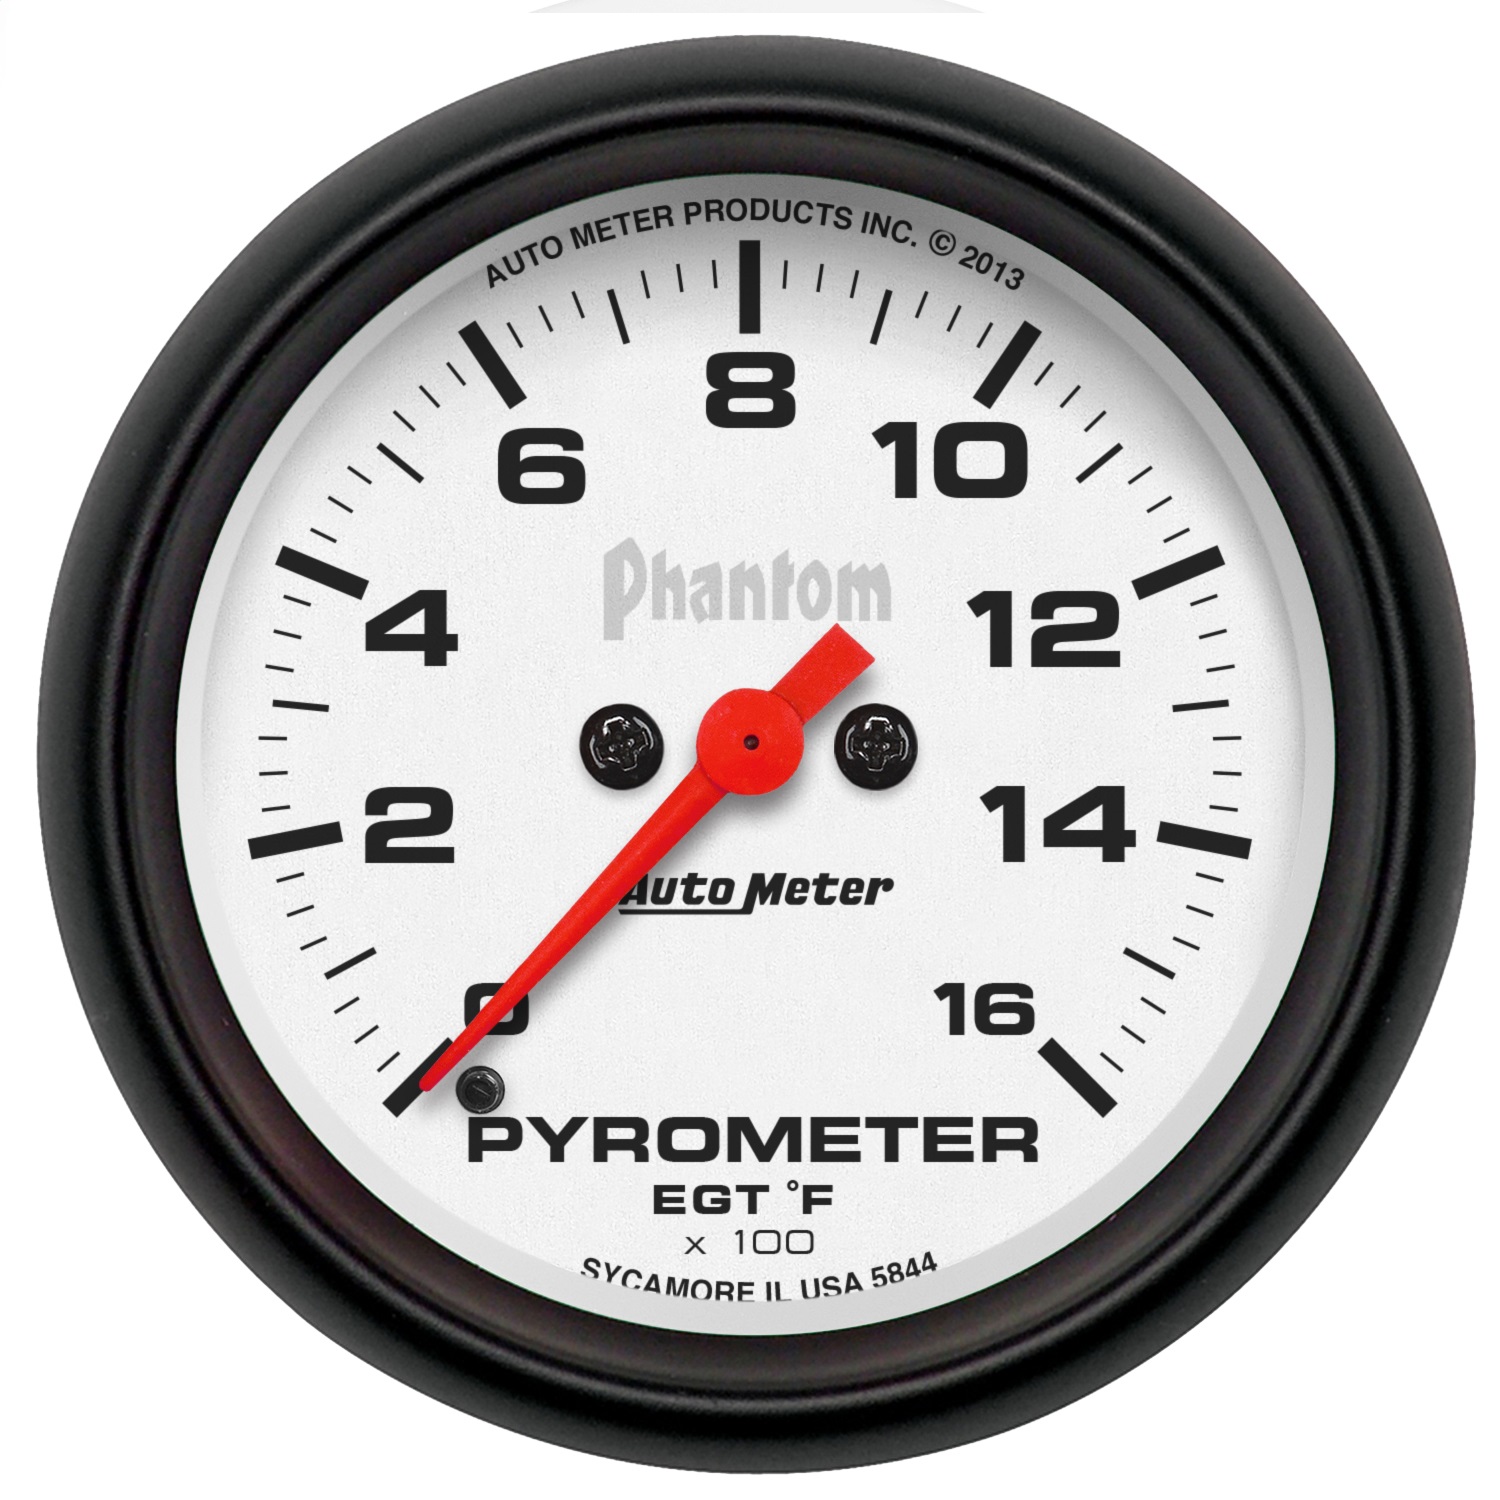 Auto Meter Auto Meter 5844 Phantom; Digital Pyrometer Gauge Kit